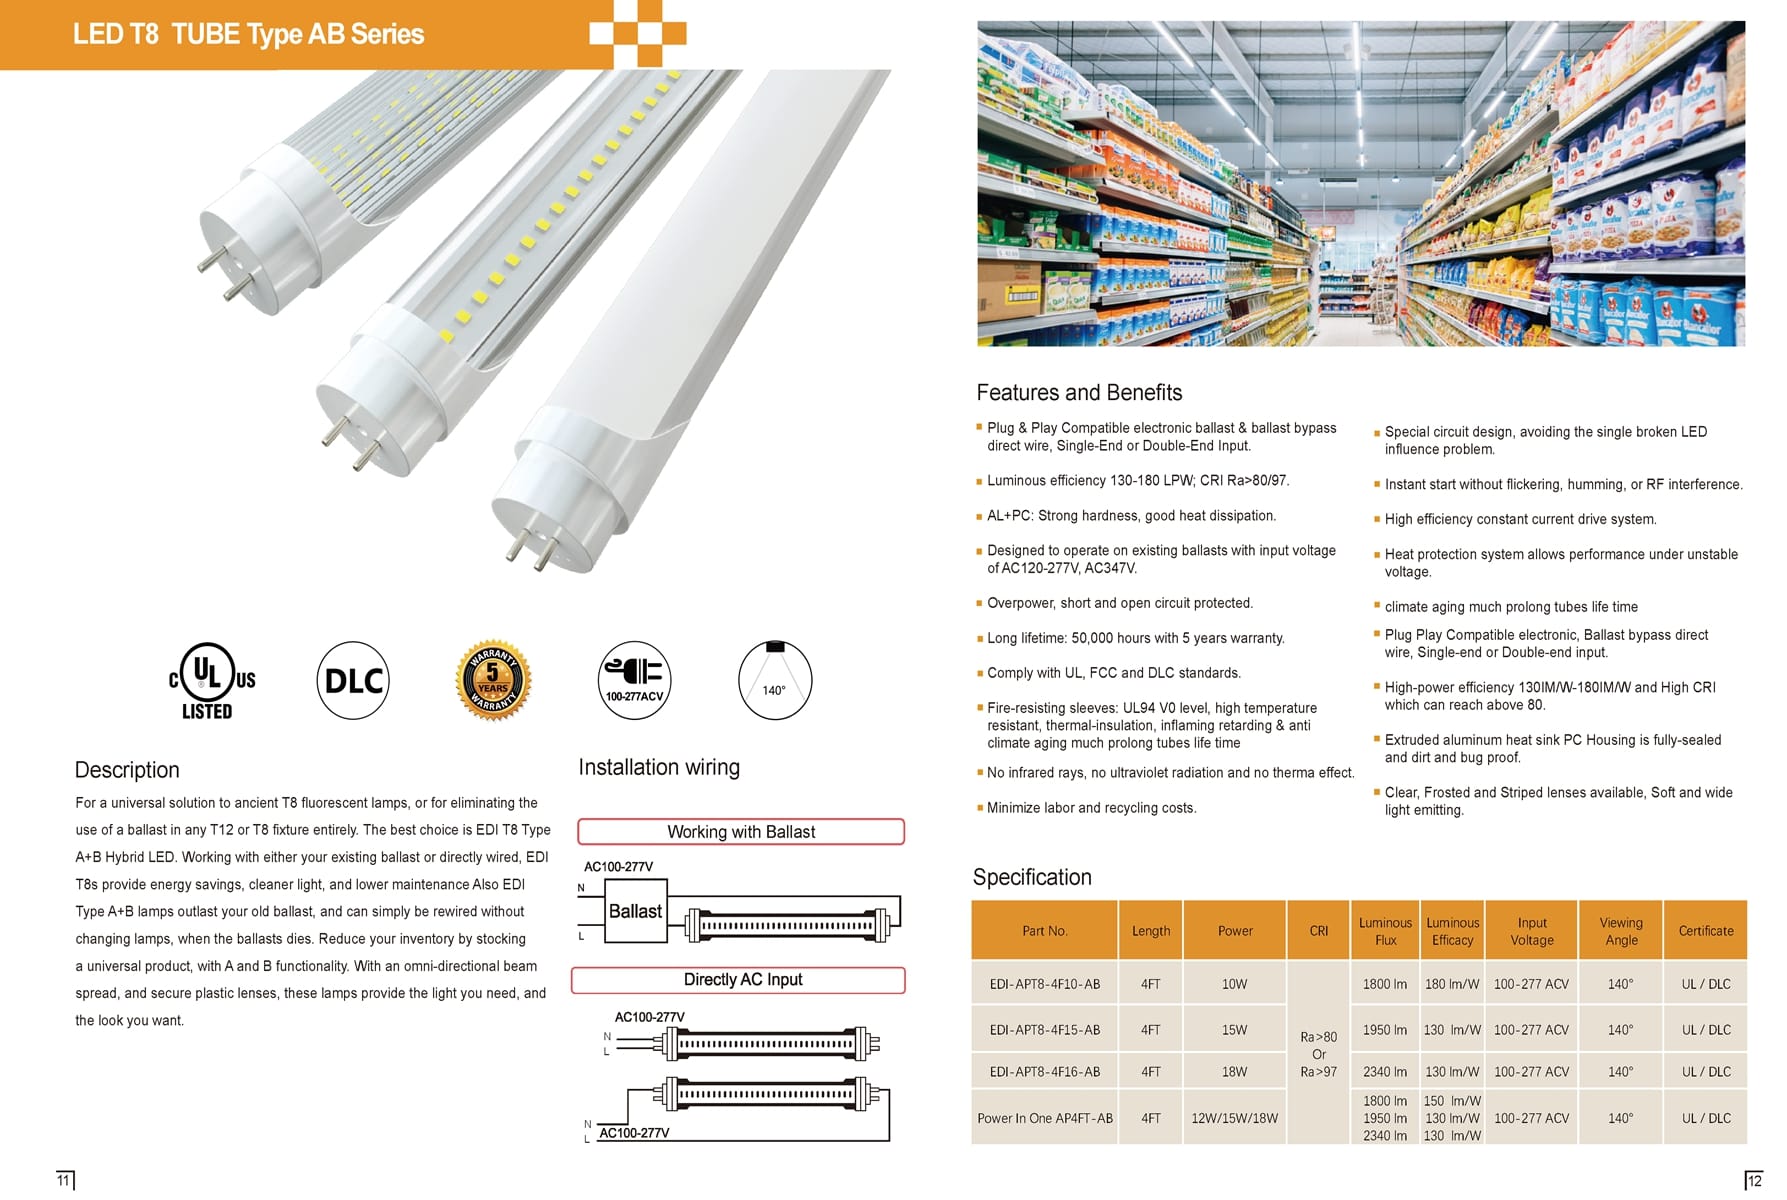 4 inch LED tube introduction